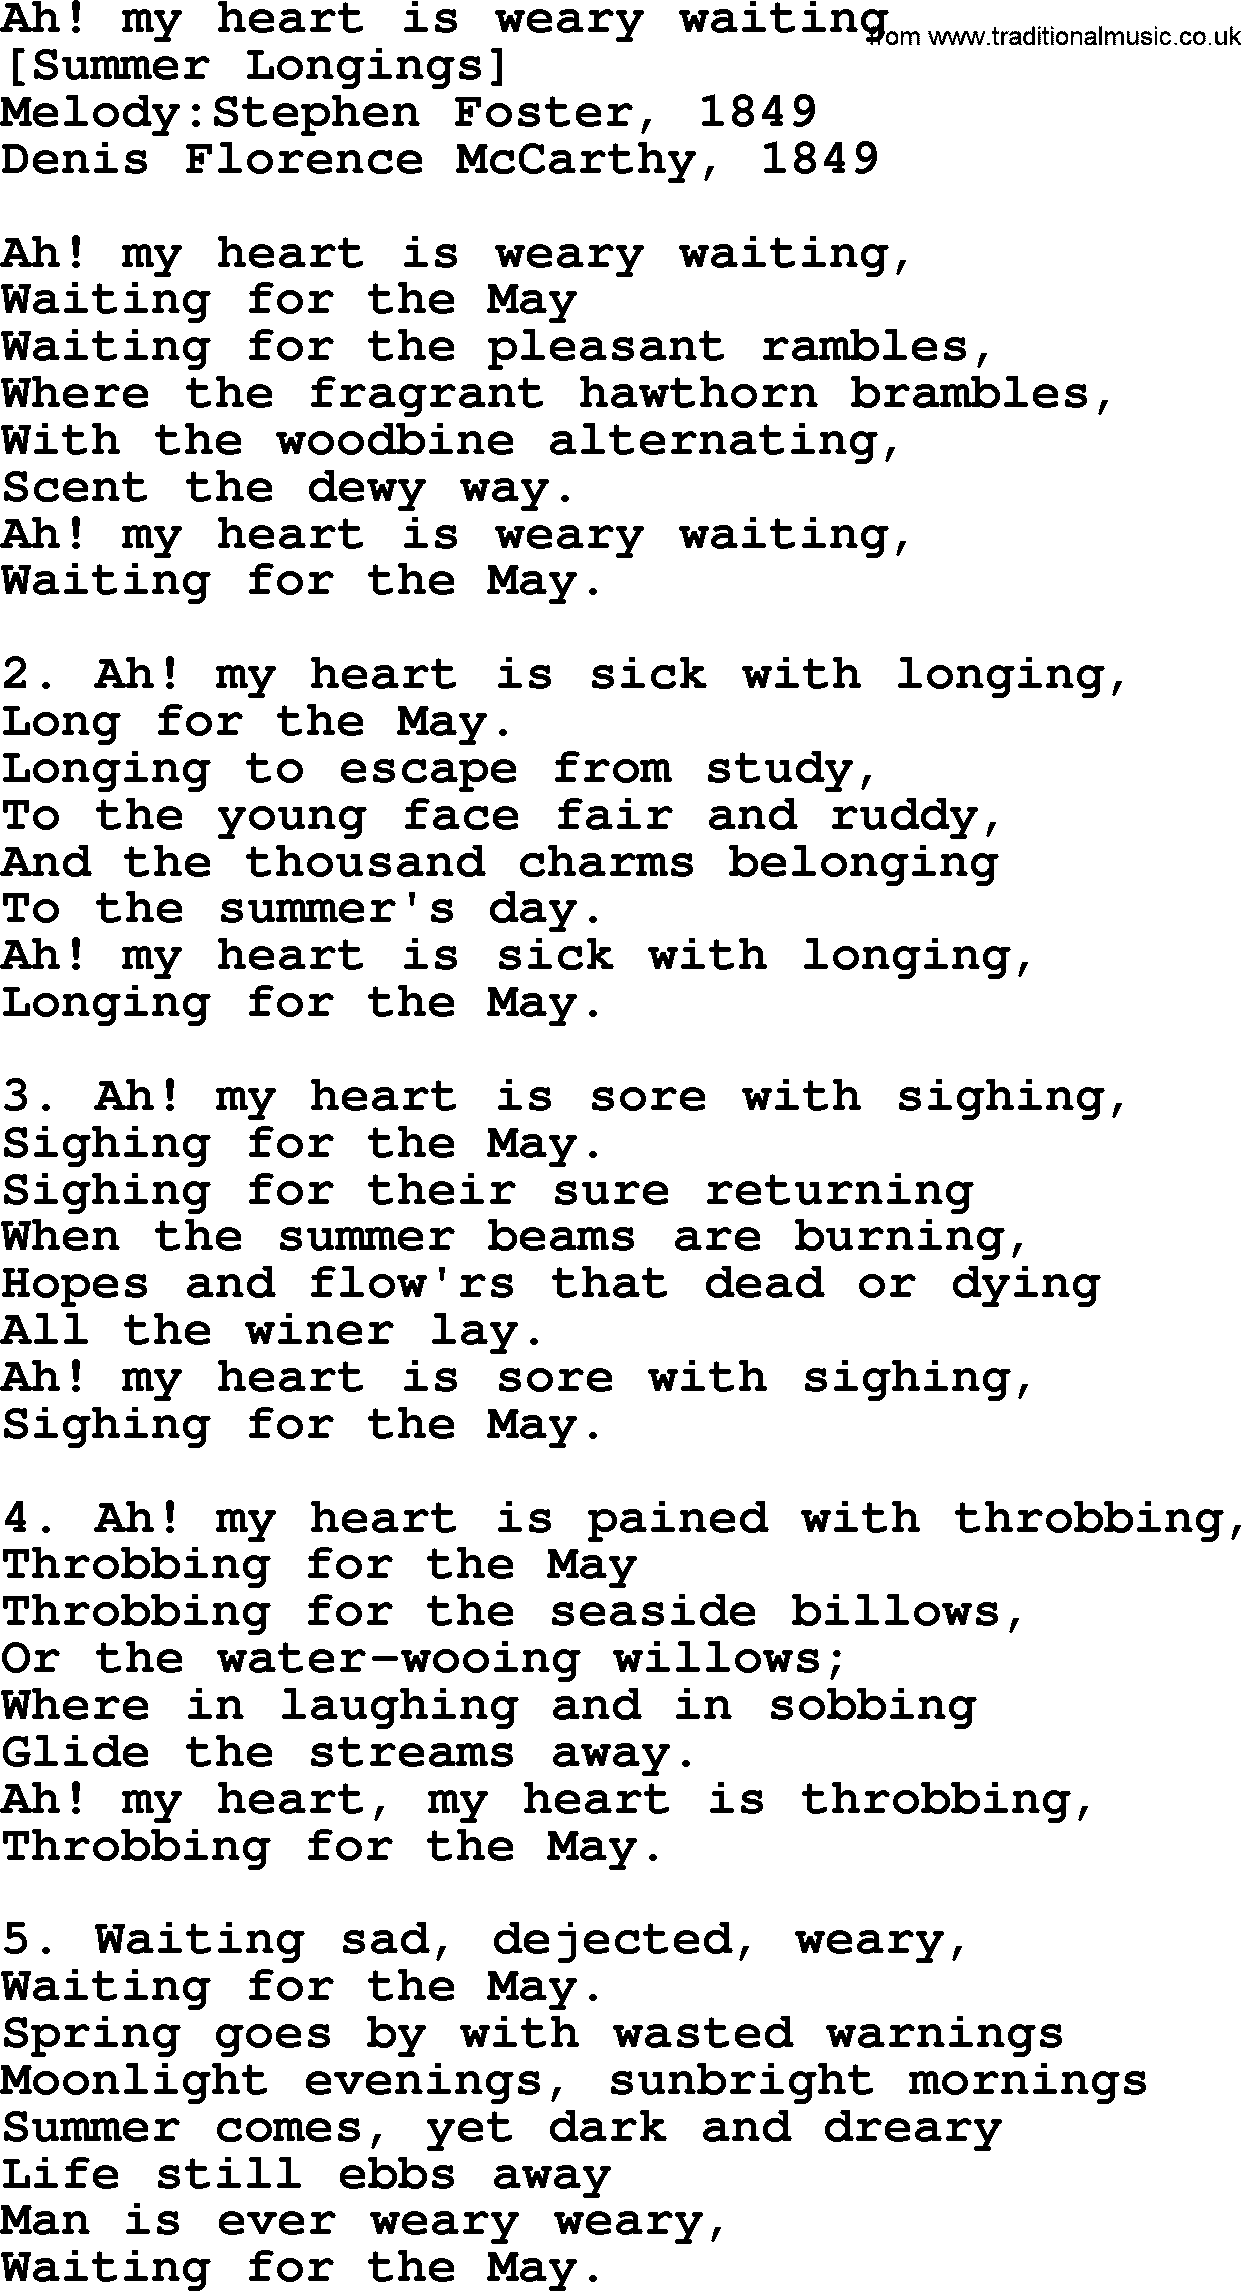 Old American Song: Ah! My Heart Is Weary Waiting, lyrics